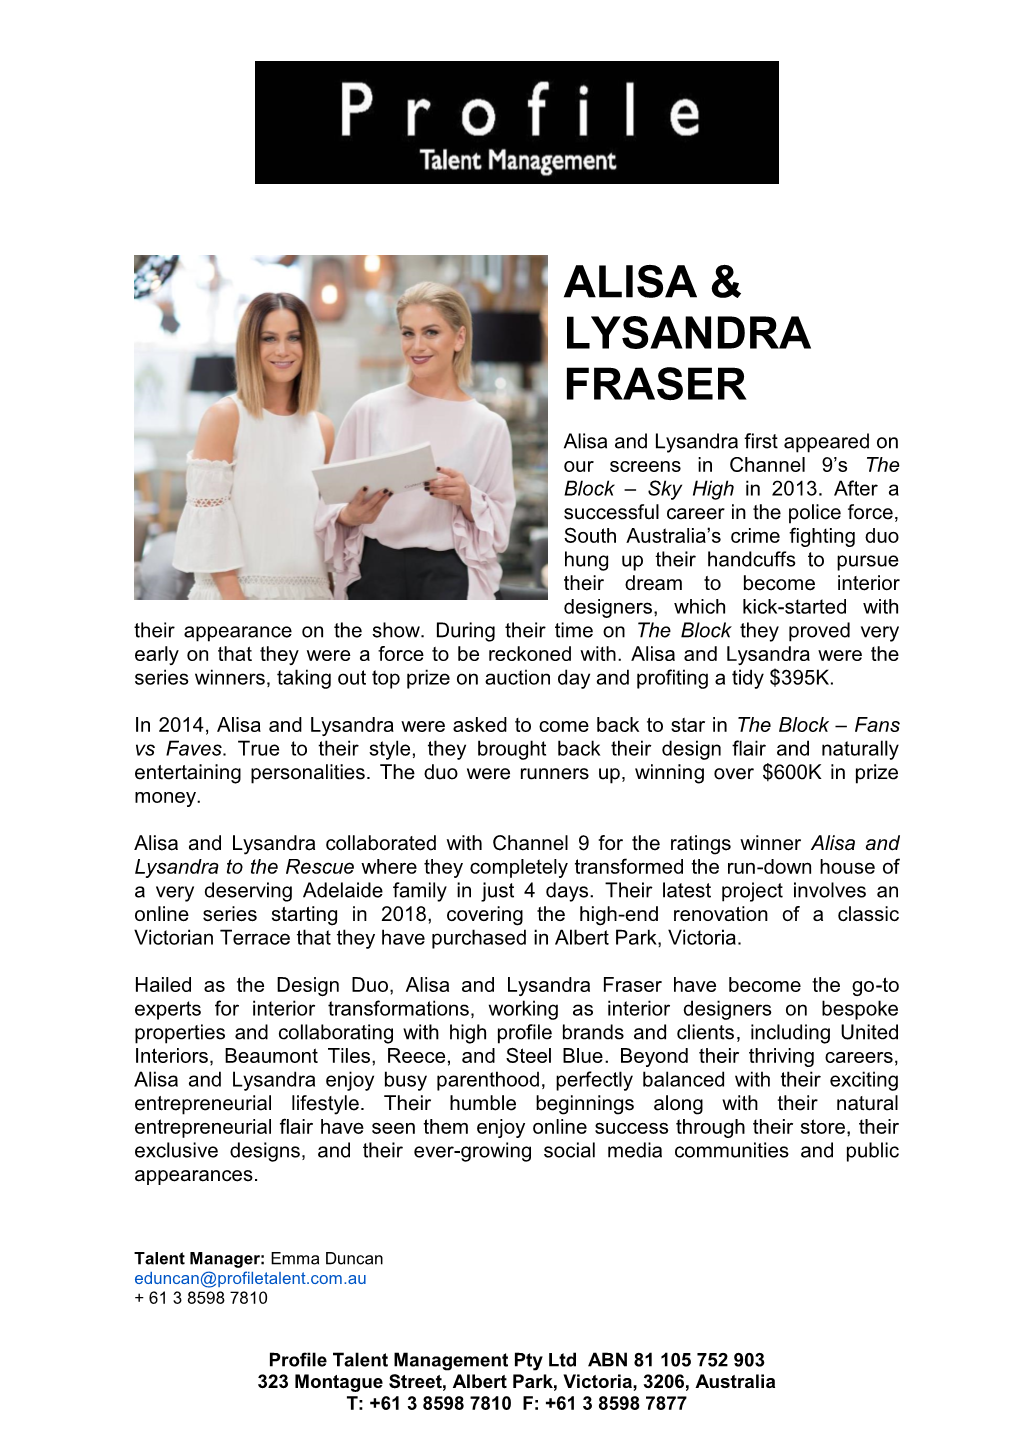 Alisa & Lysandra Fraser